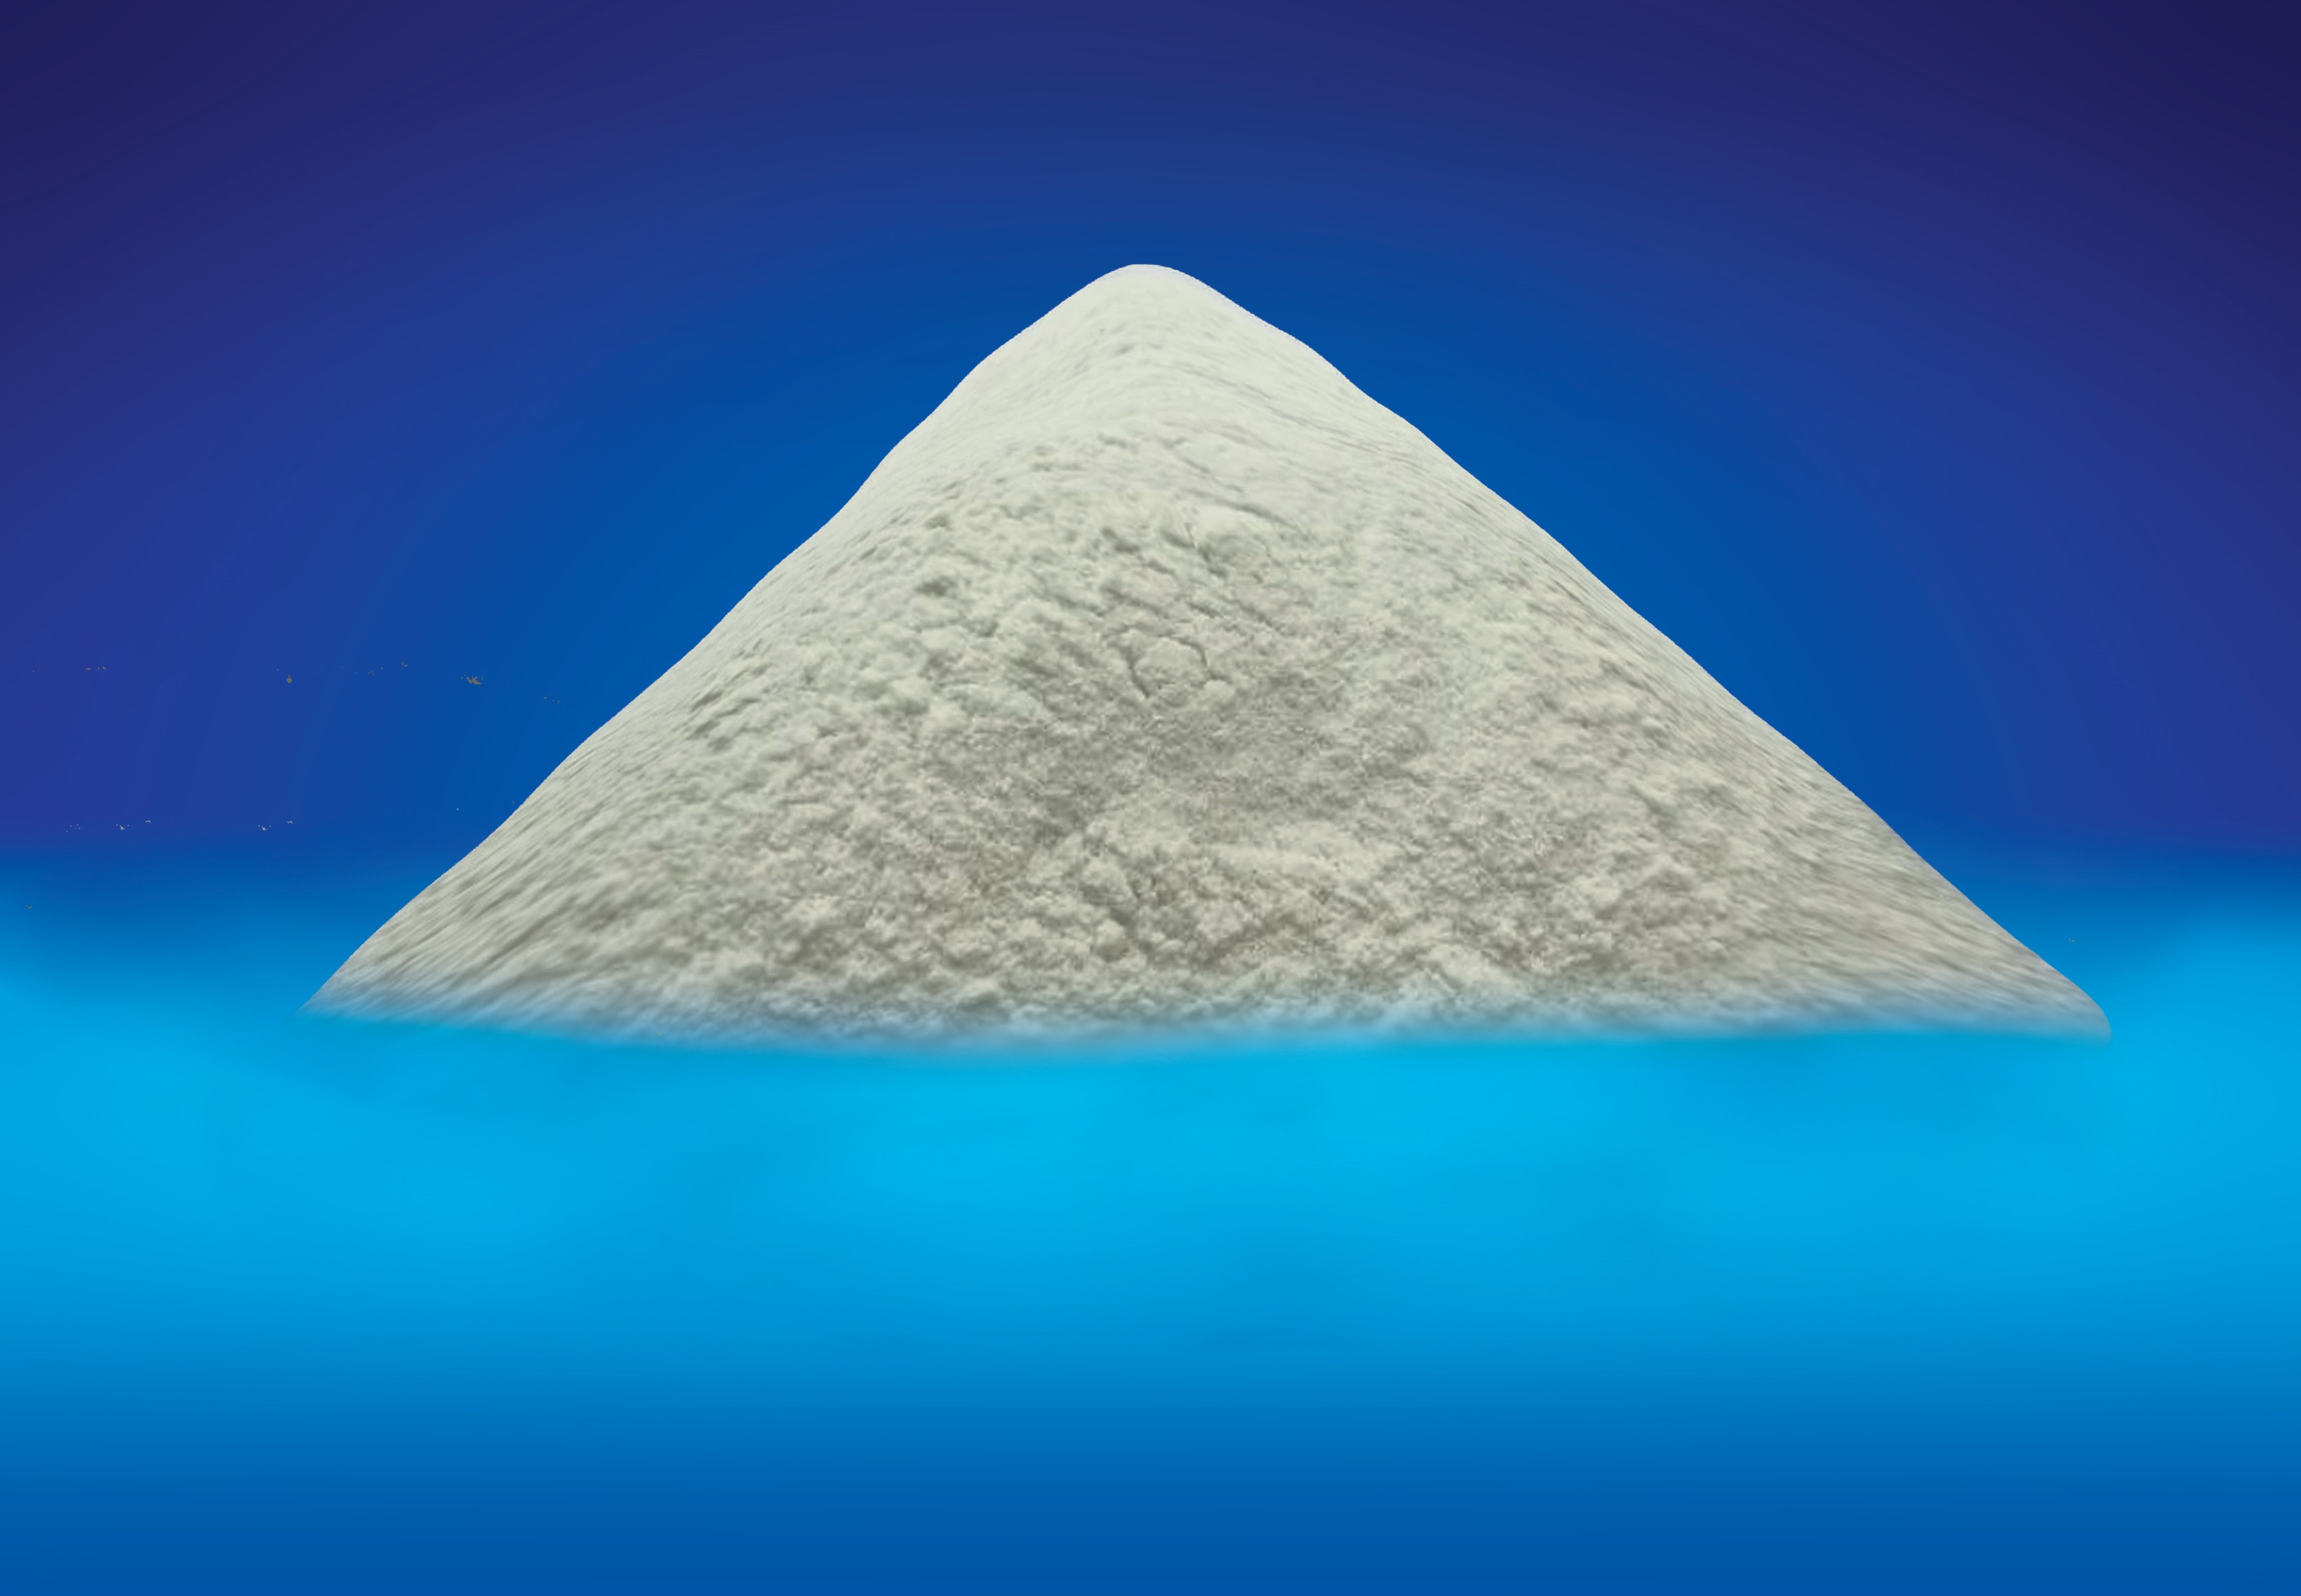 L-selenomethionine Gray White Powder Food Feed Additive